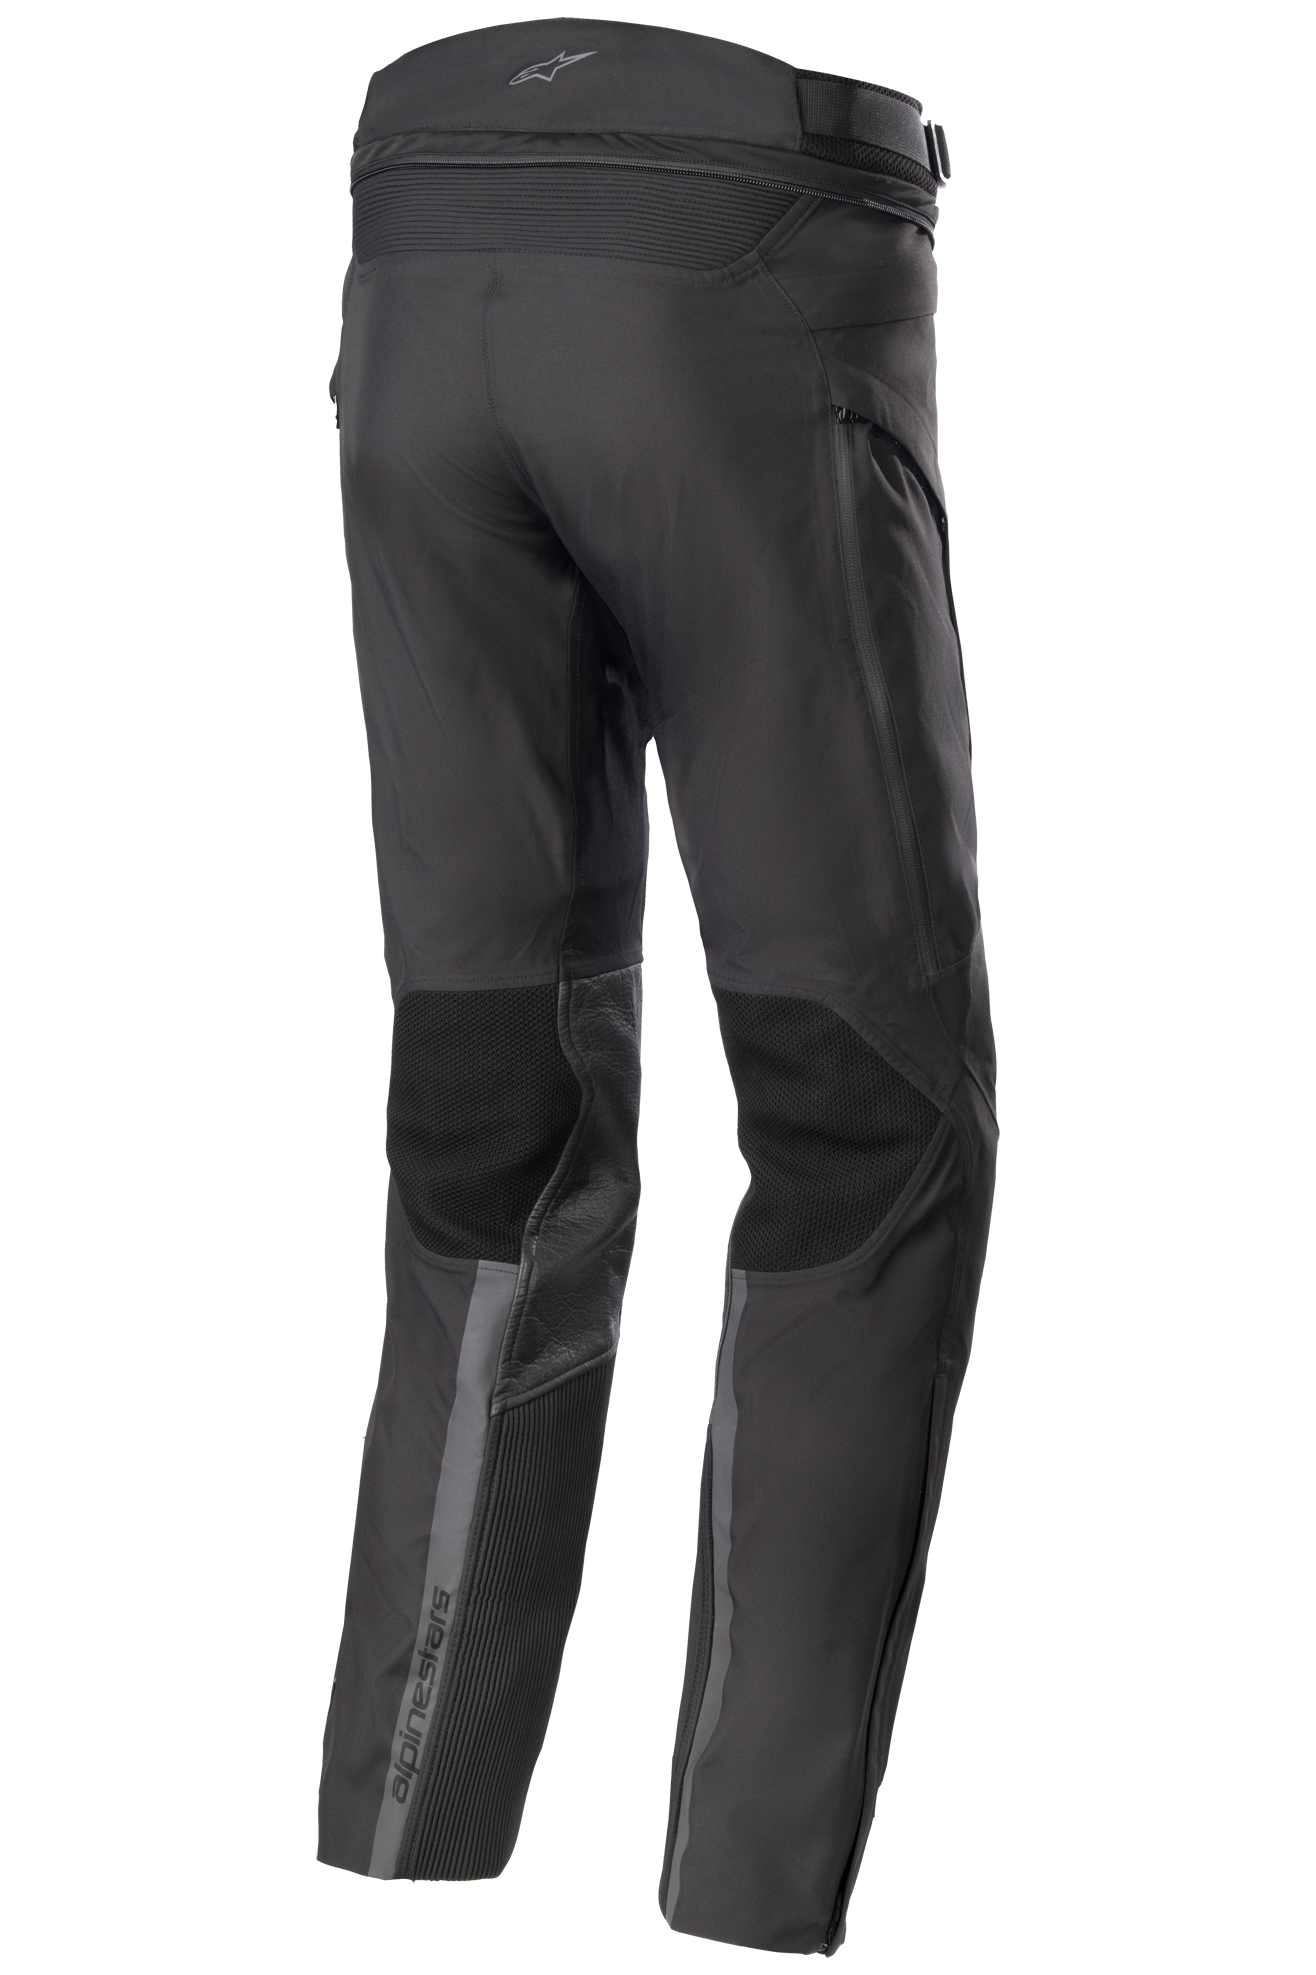 NEW - Alpinestars Jagg Airflow Leather Moto Pants, Black | SidelineSwap